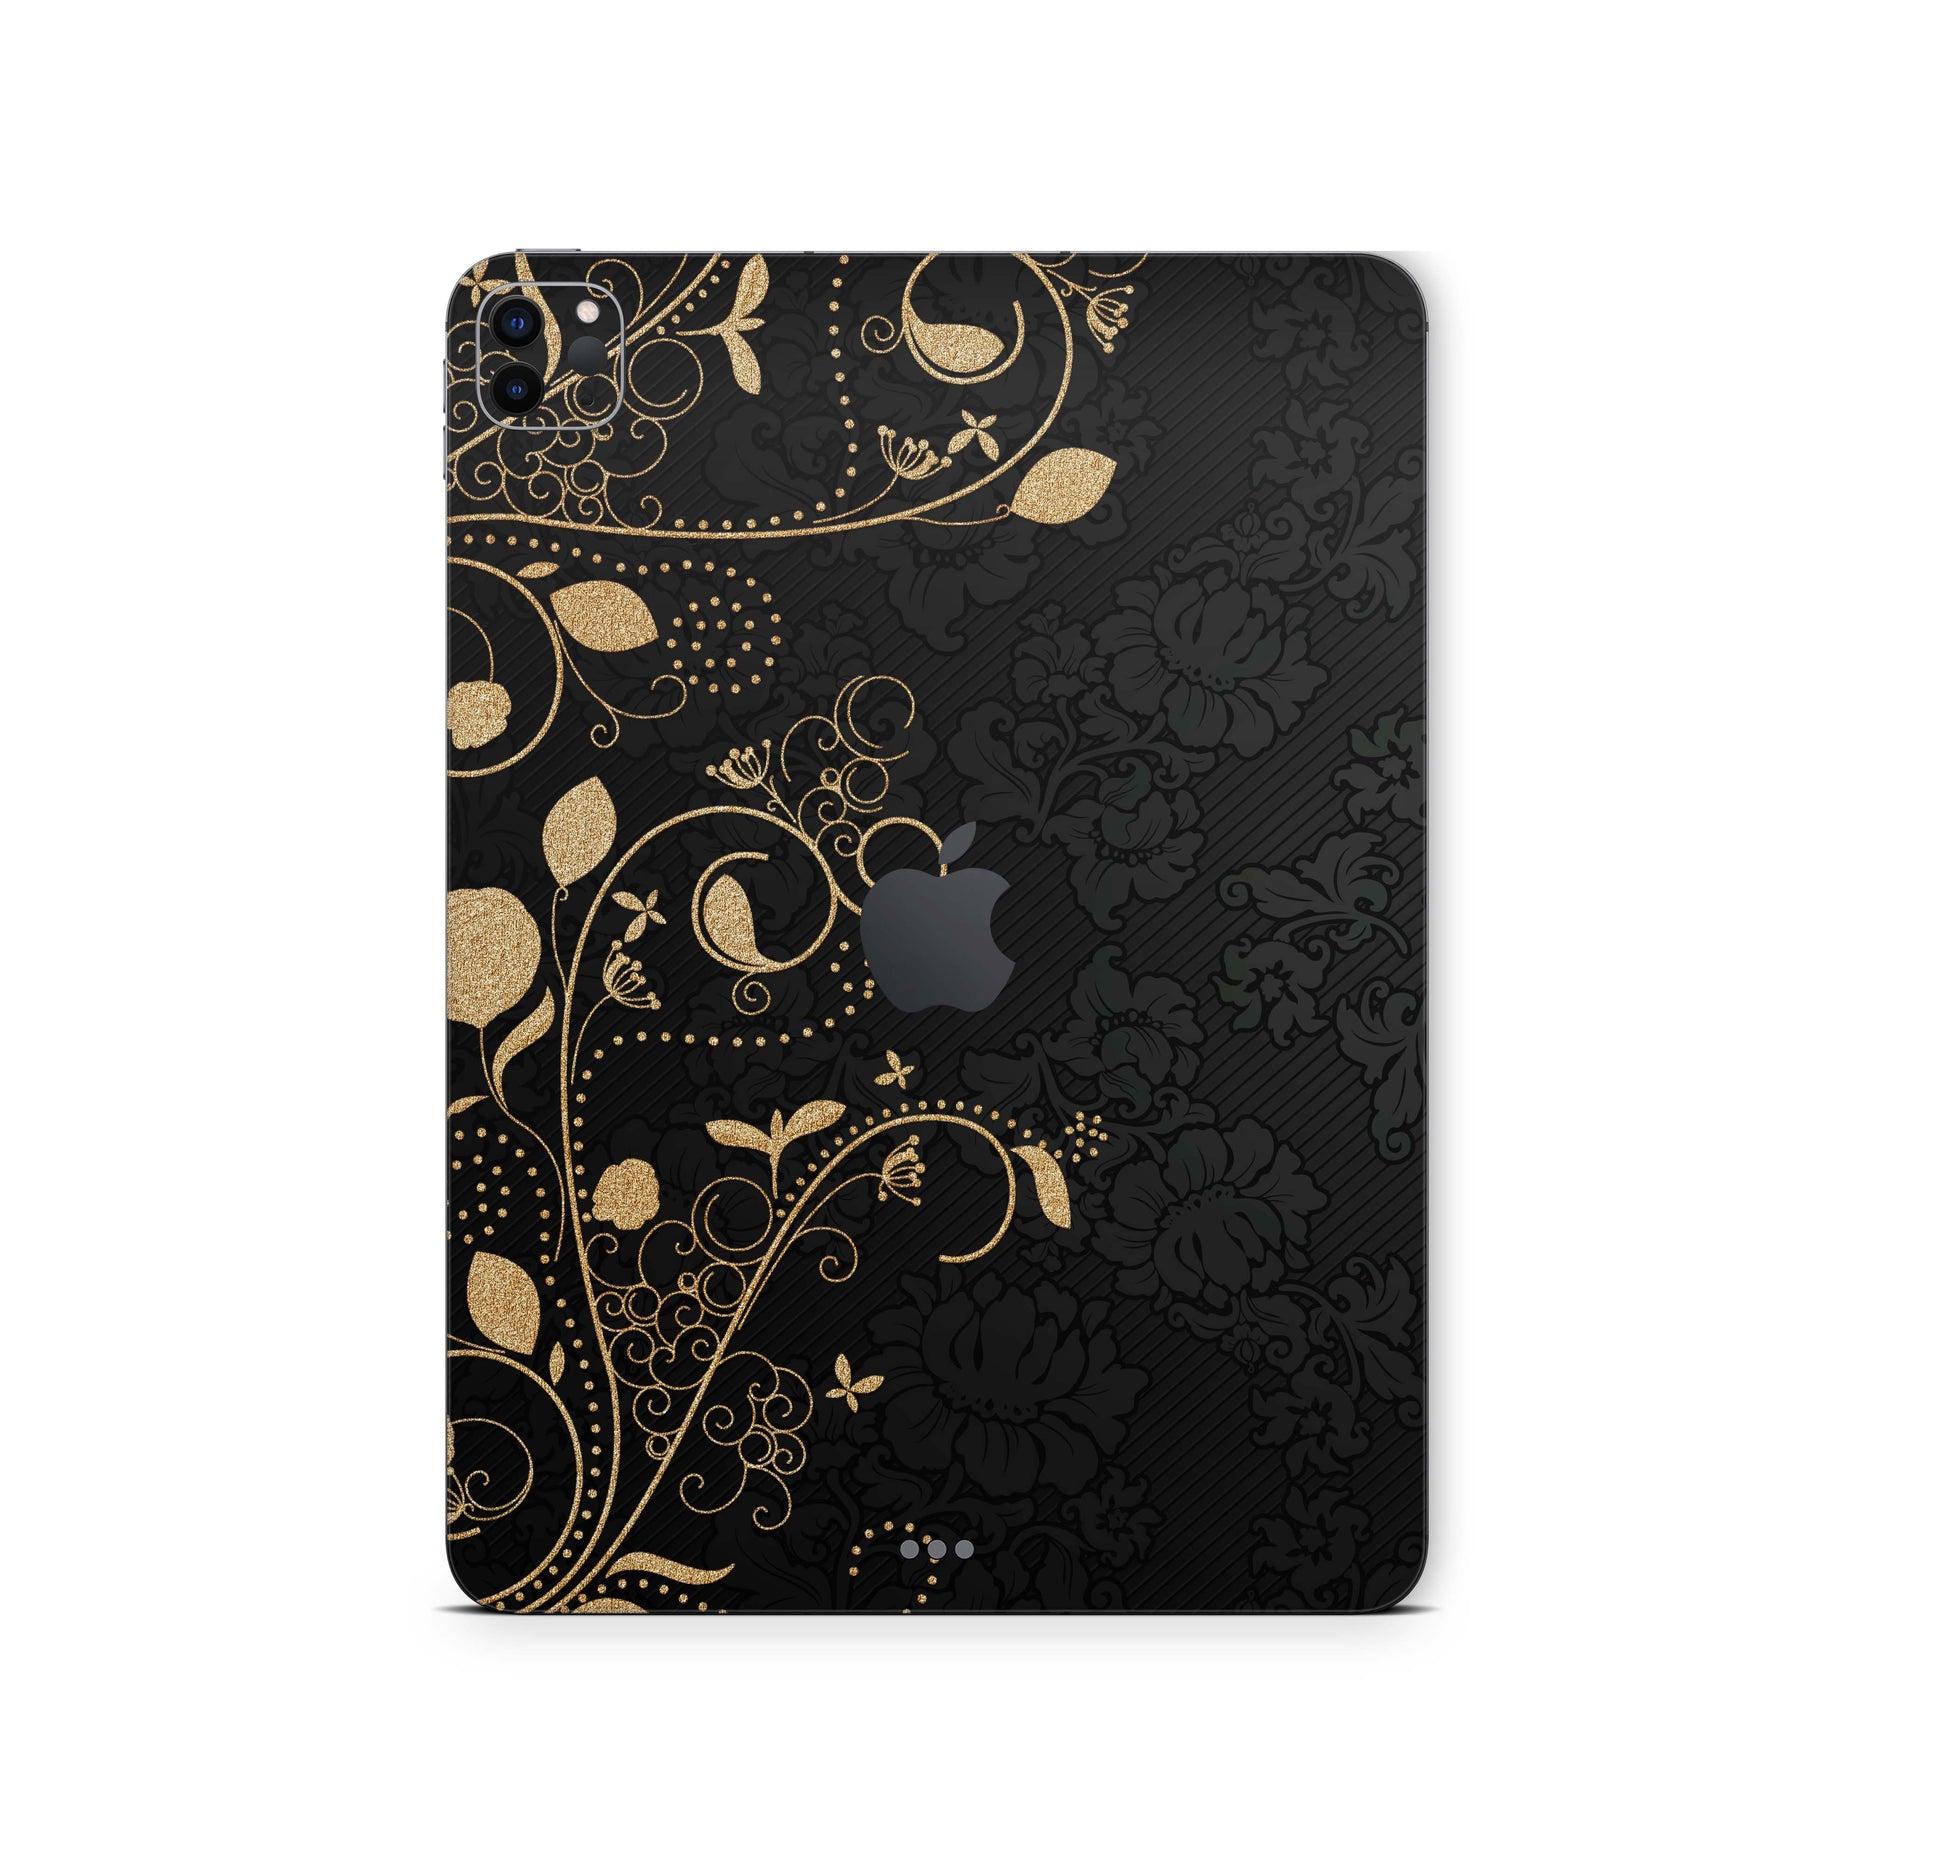 iPad Pro Skin 11" 2.Generation A2228 Design Cover Folie Vinyl Skins & Wraps Aufkleber Skins4u Darkmoon  